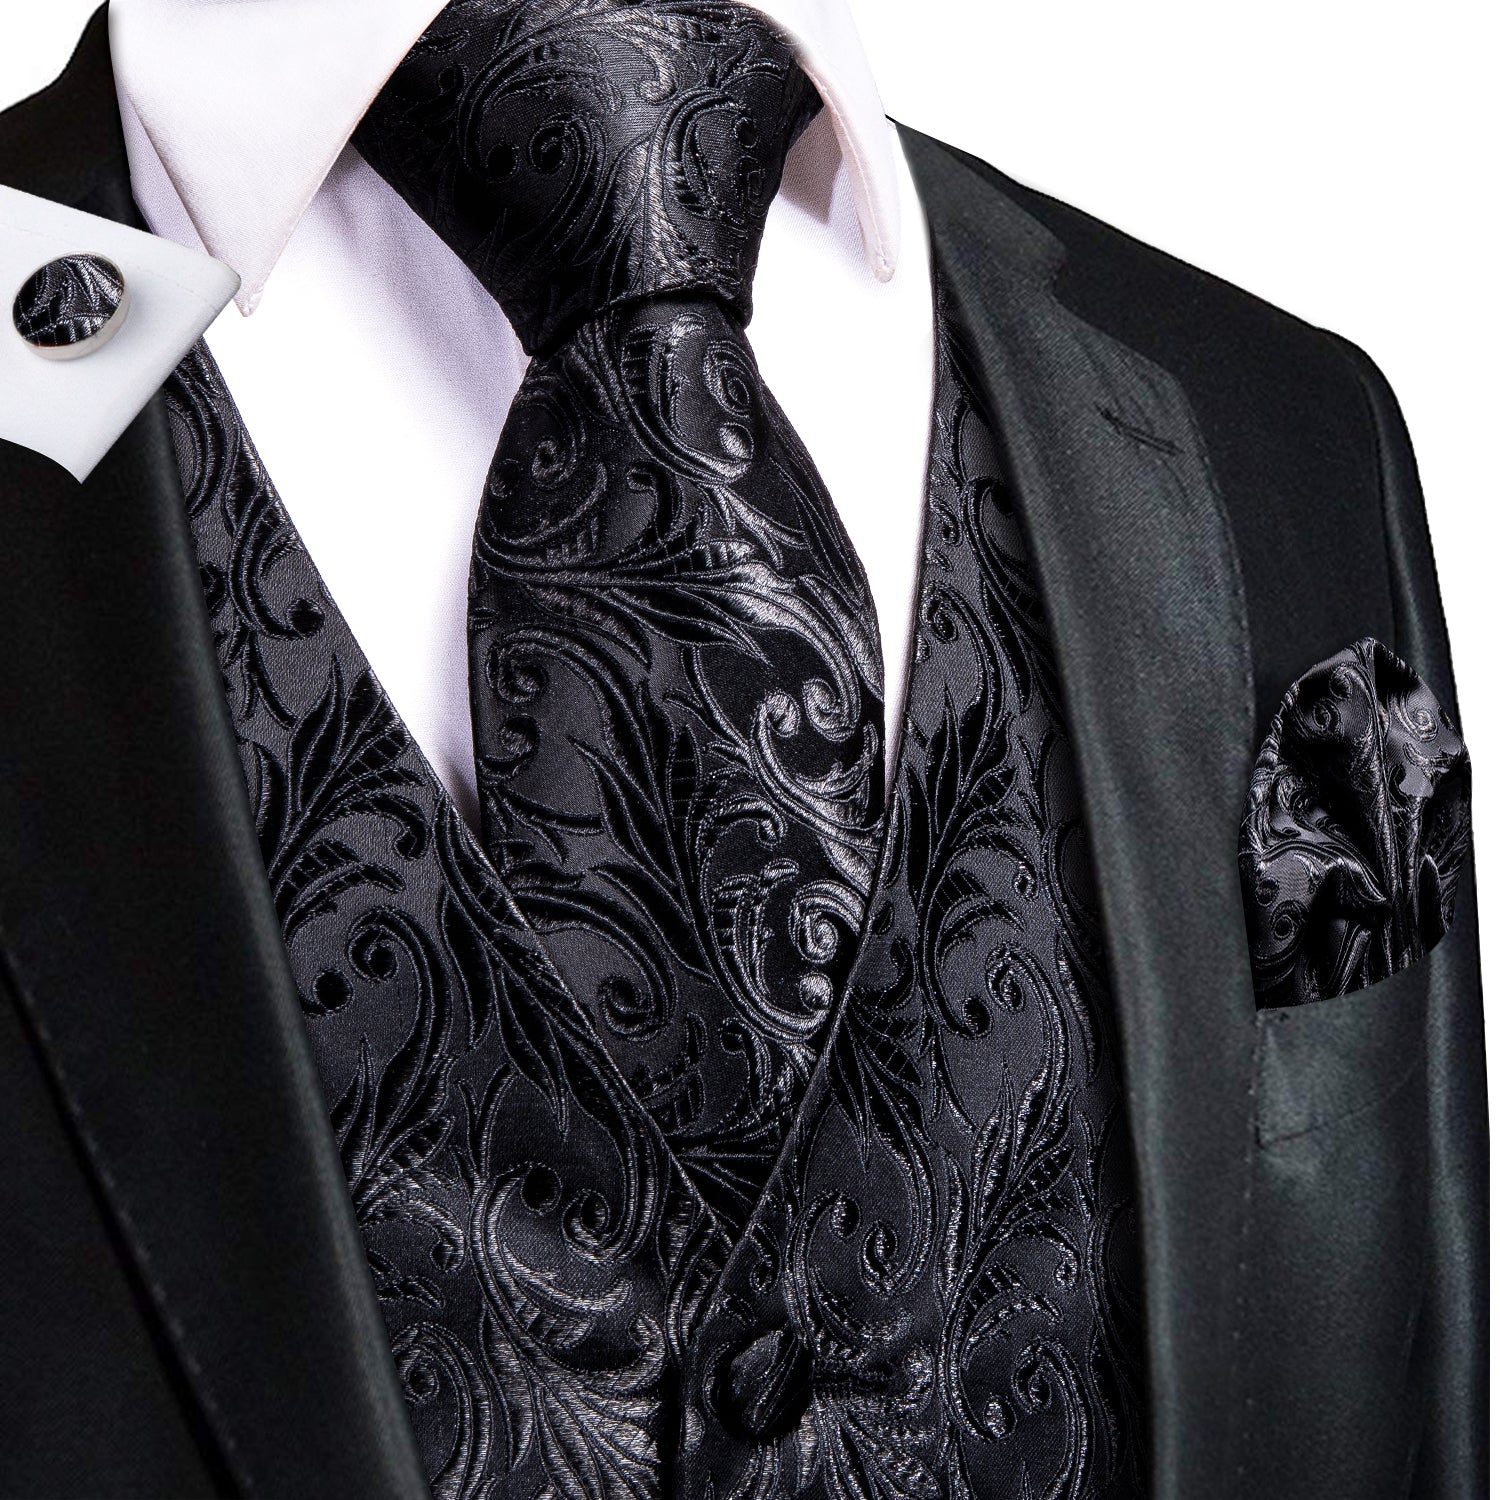 Black Leaves Silk Men's Vest Hanky Cufflinks Tie Set Waistcoat Suit Set